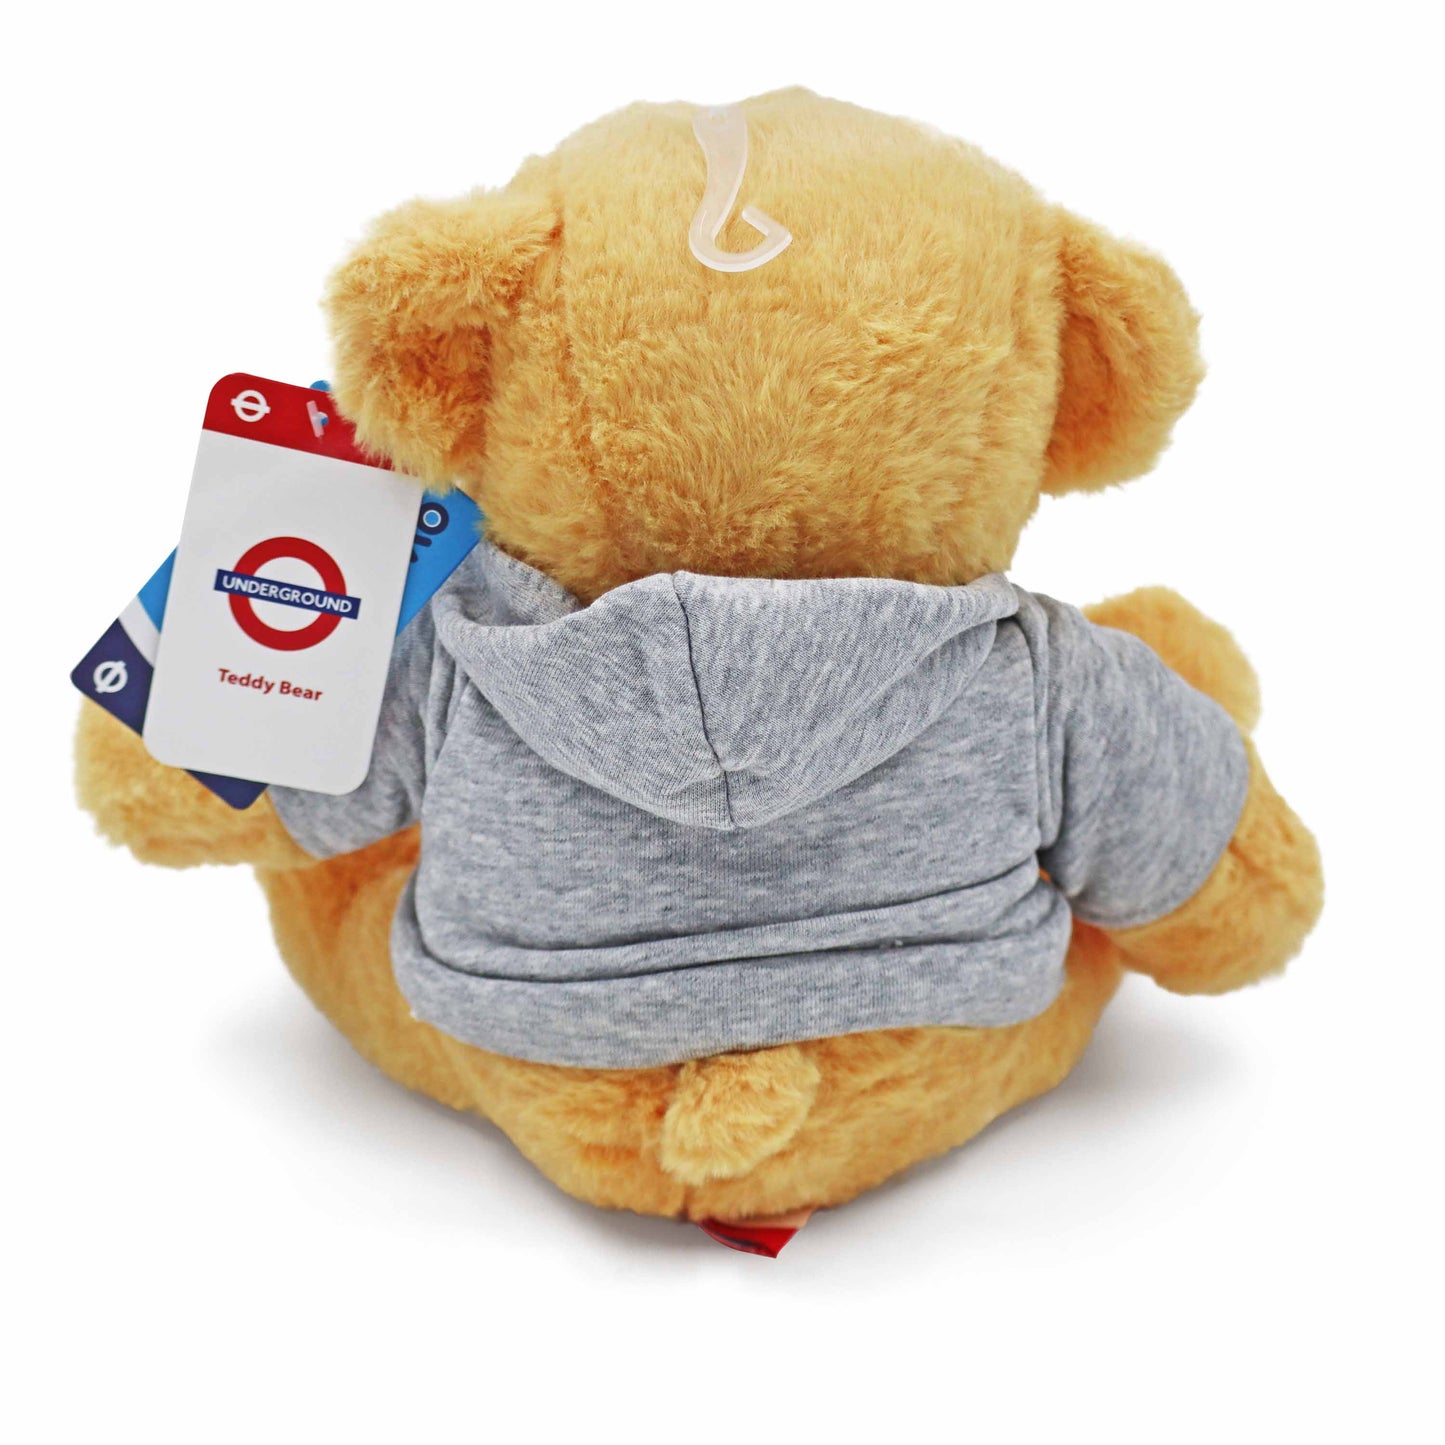 London Underground Teddy Bear - 'UNDERGROUND' Light Grey - 25cm - TFL Merchandise